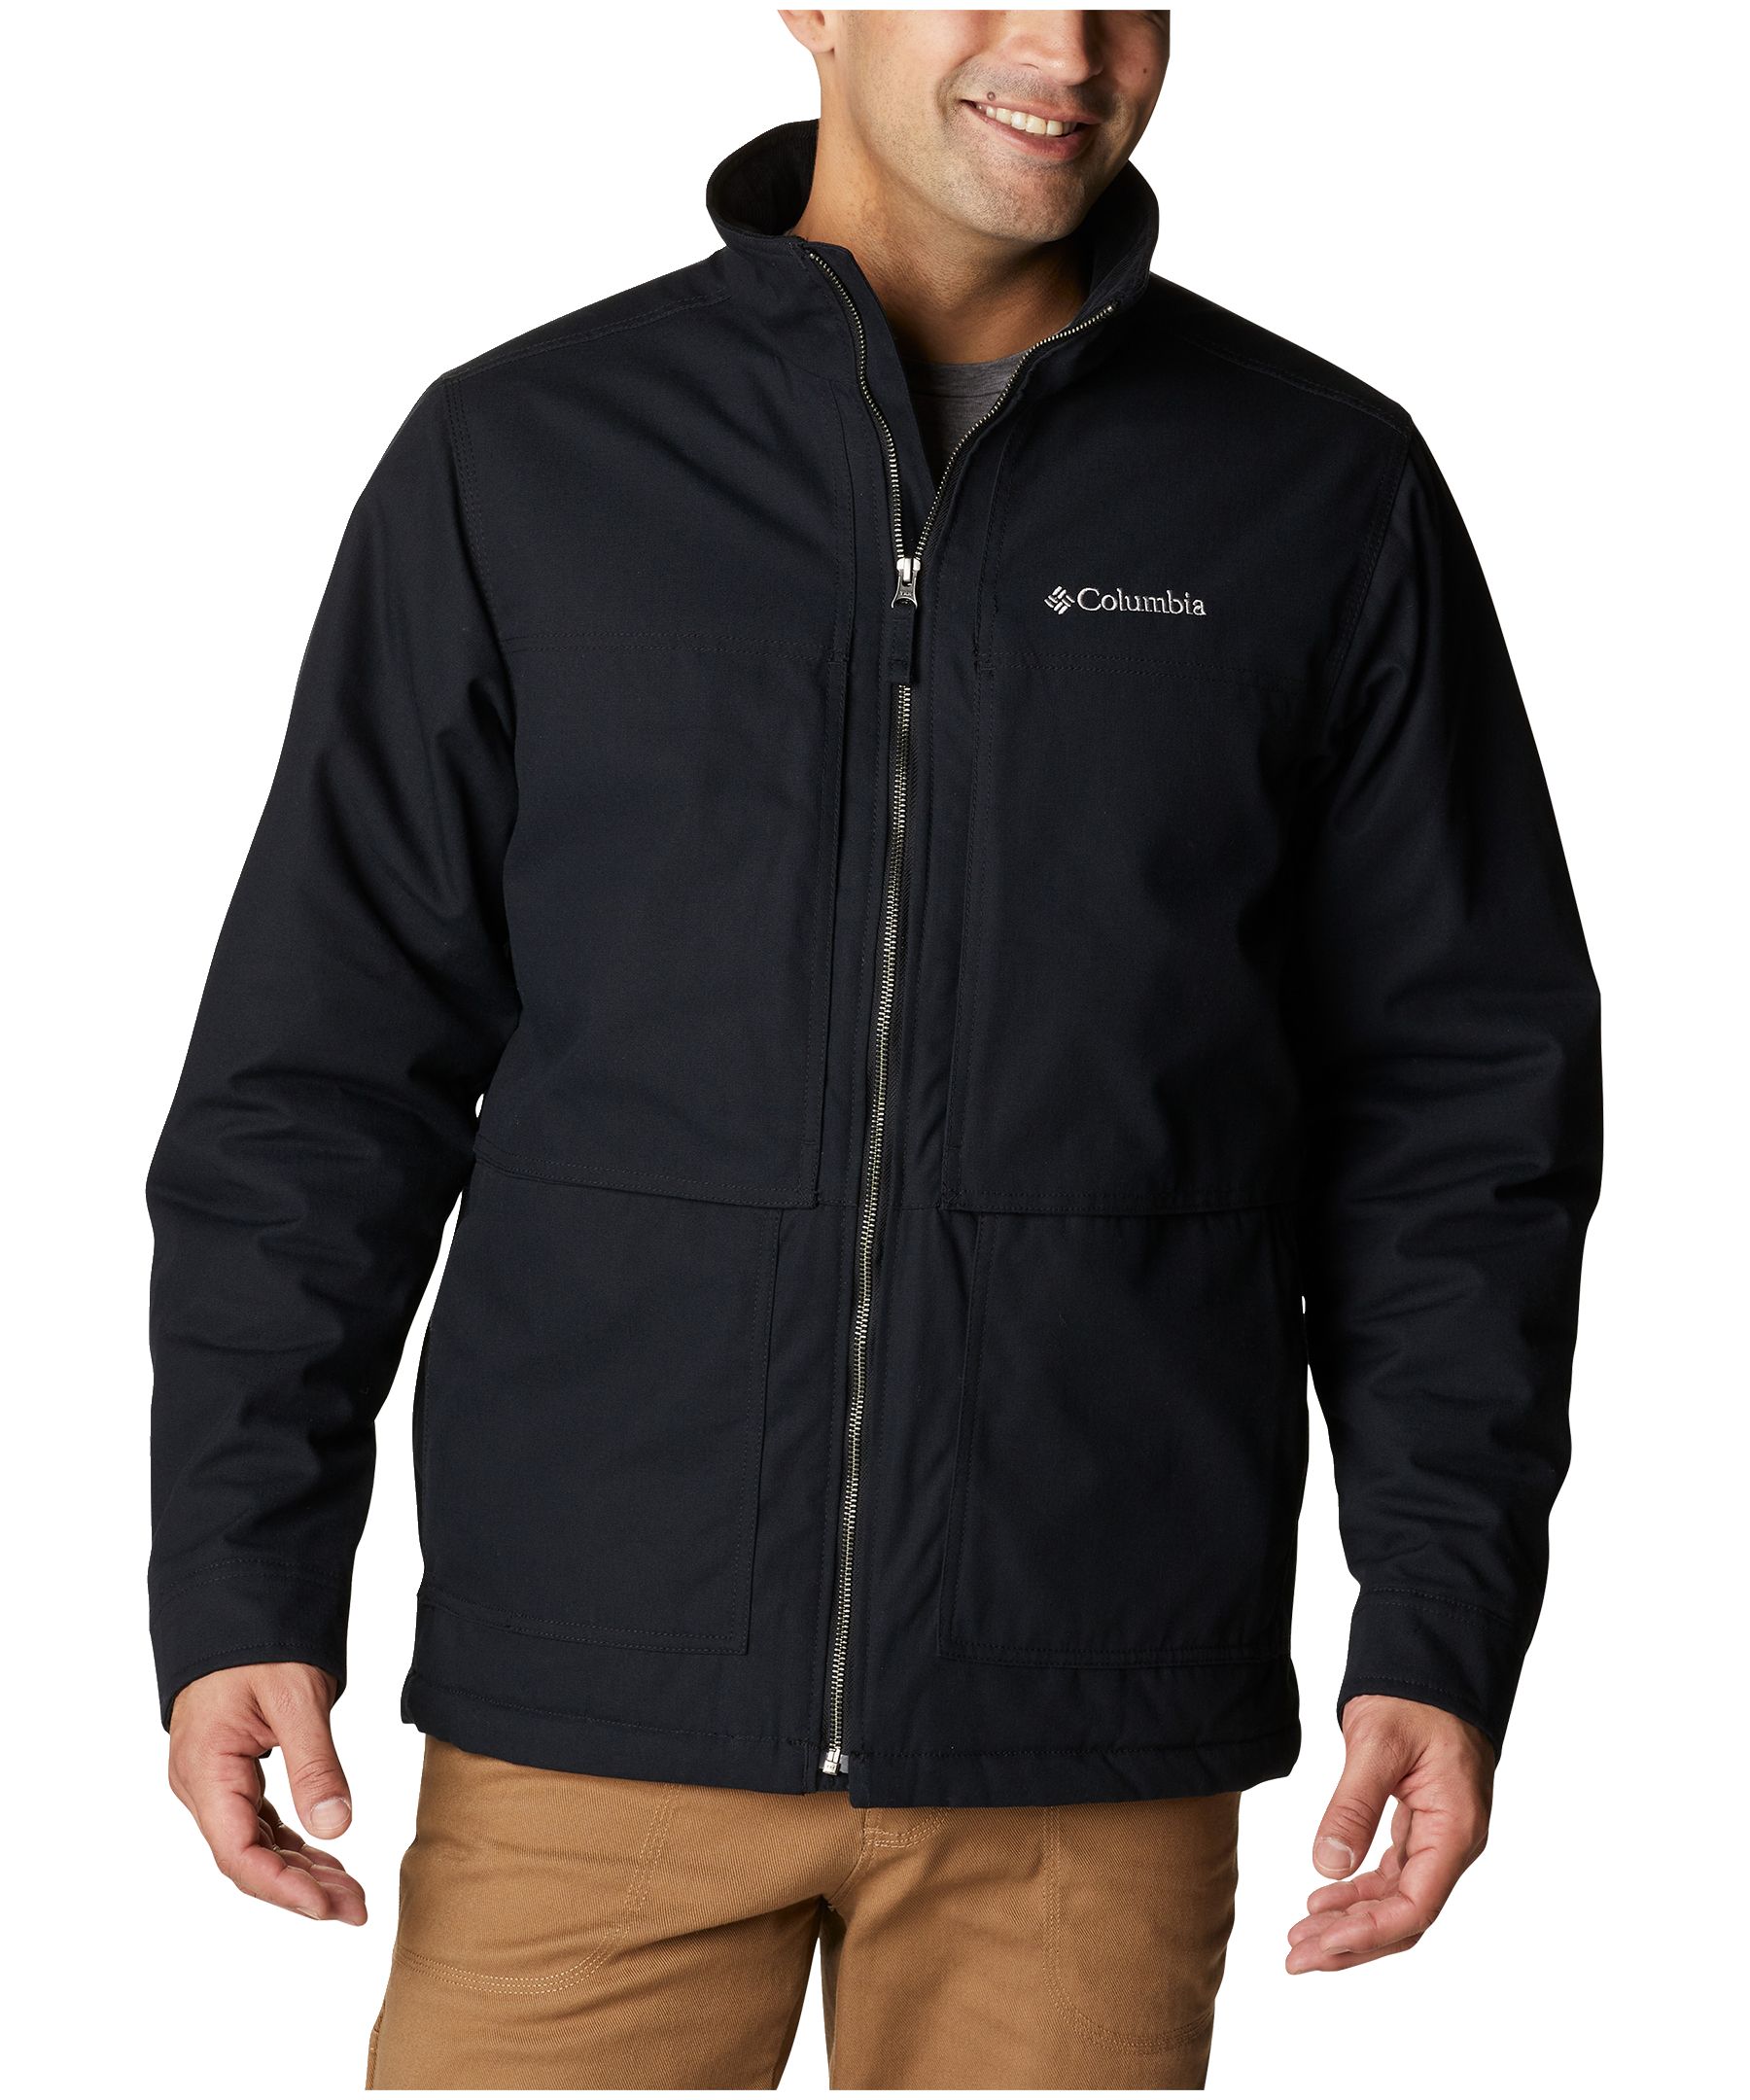 Mens 4x Columbia Fleece Jacket Sale Online | bellvalefarms.com